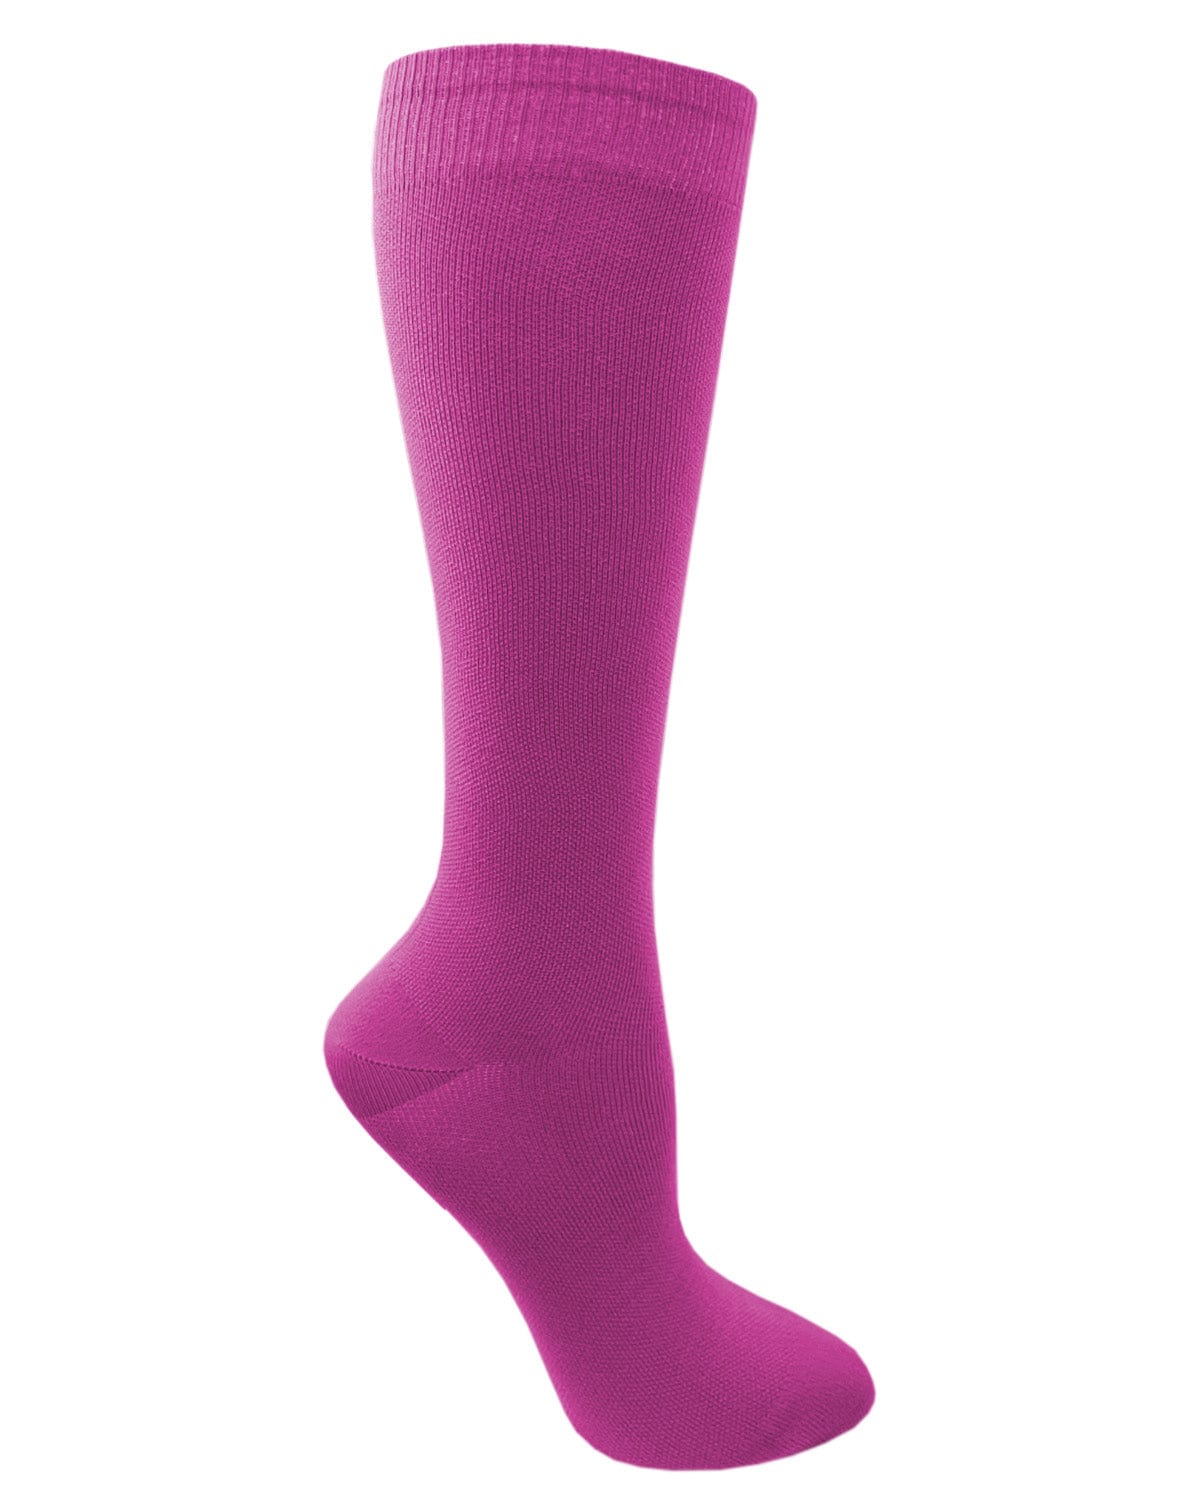 Prestige Medical Socks Orchid Prestige 30cm Premium Knit Compression Socks